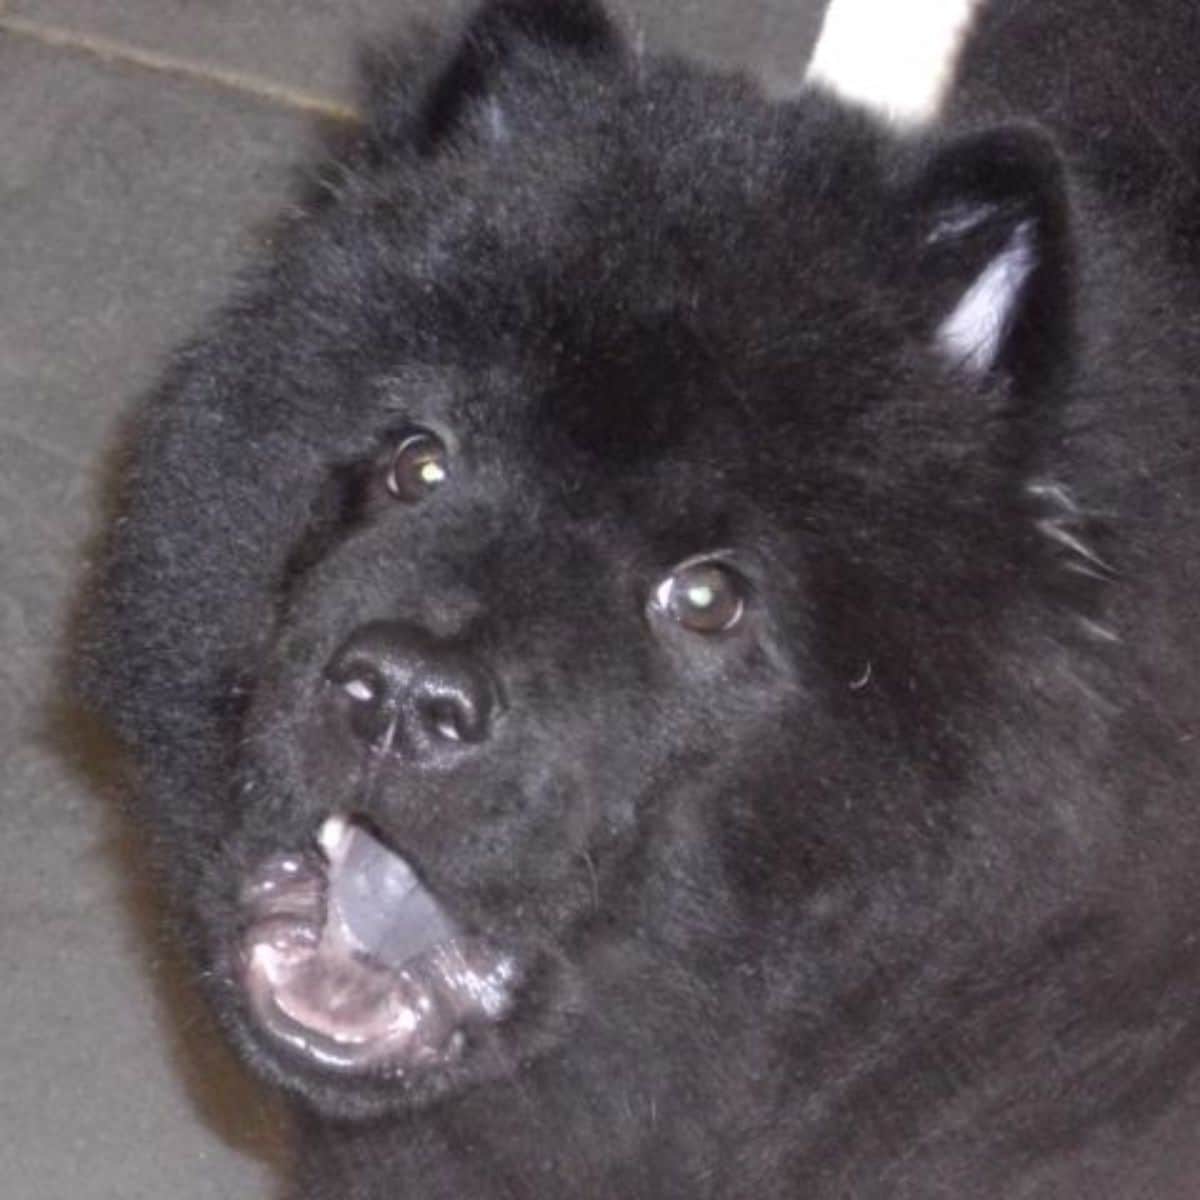 smiling fluffy black dog